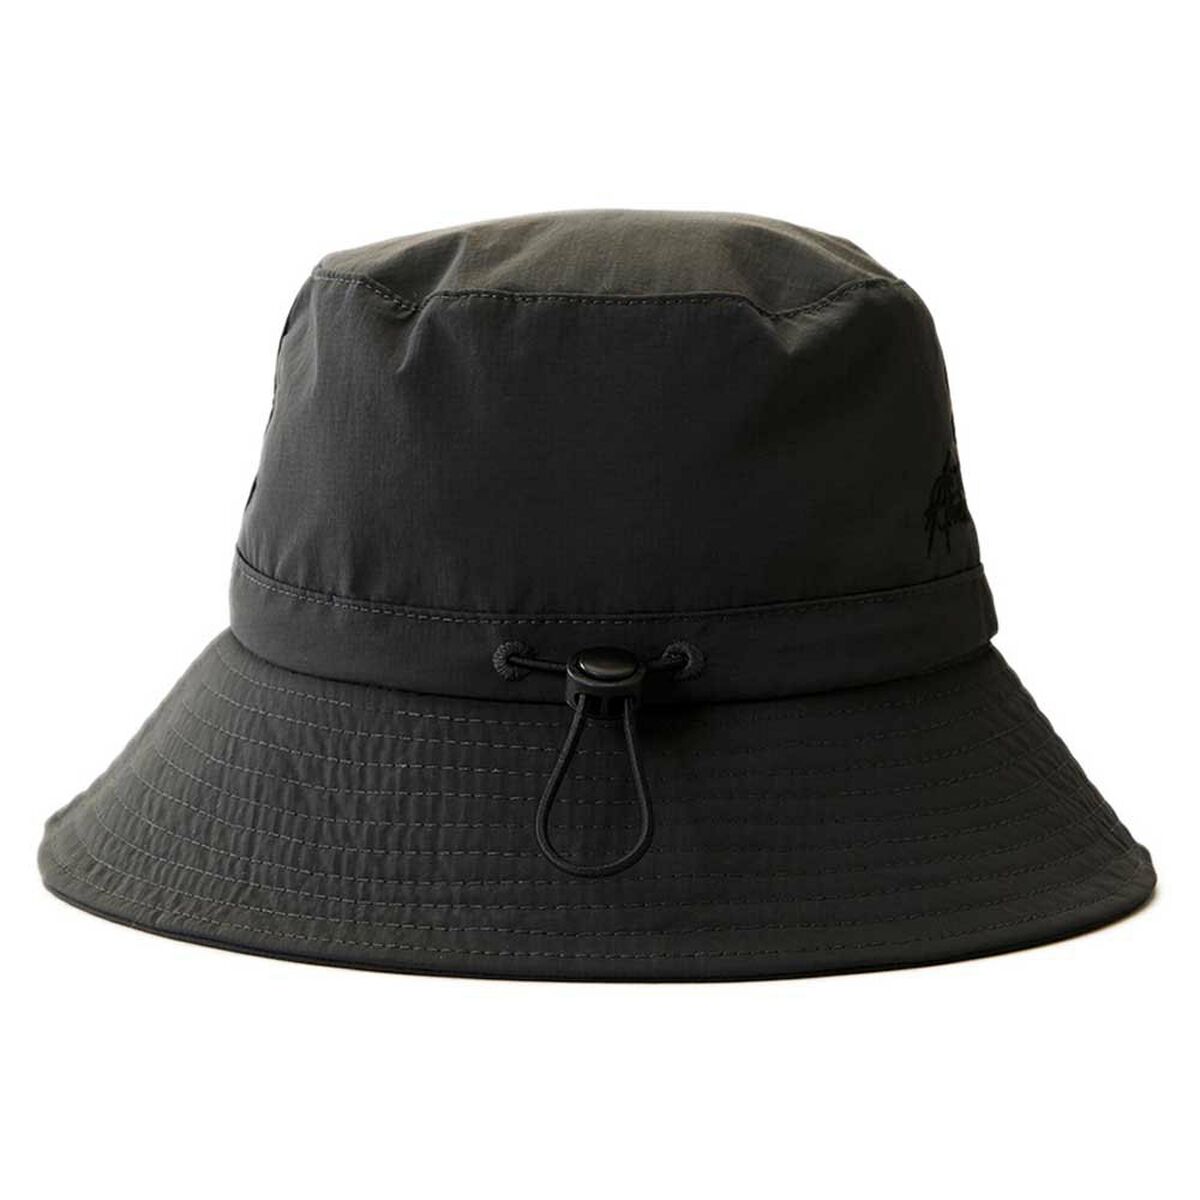 Hat Rip Curl Anti-Series Elite Black S